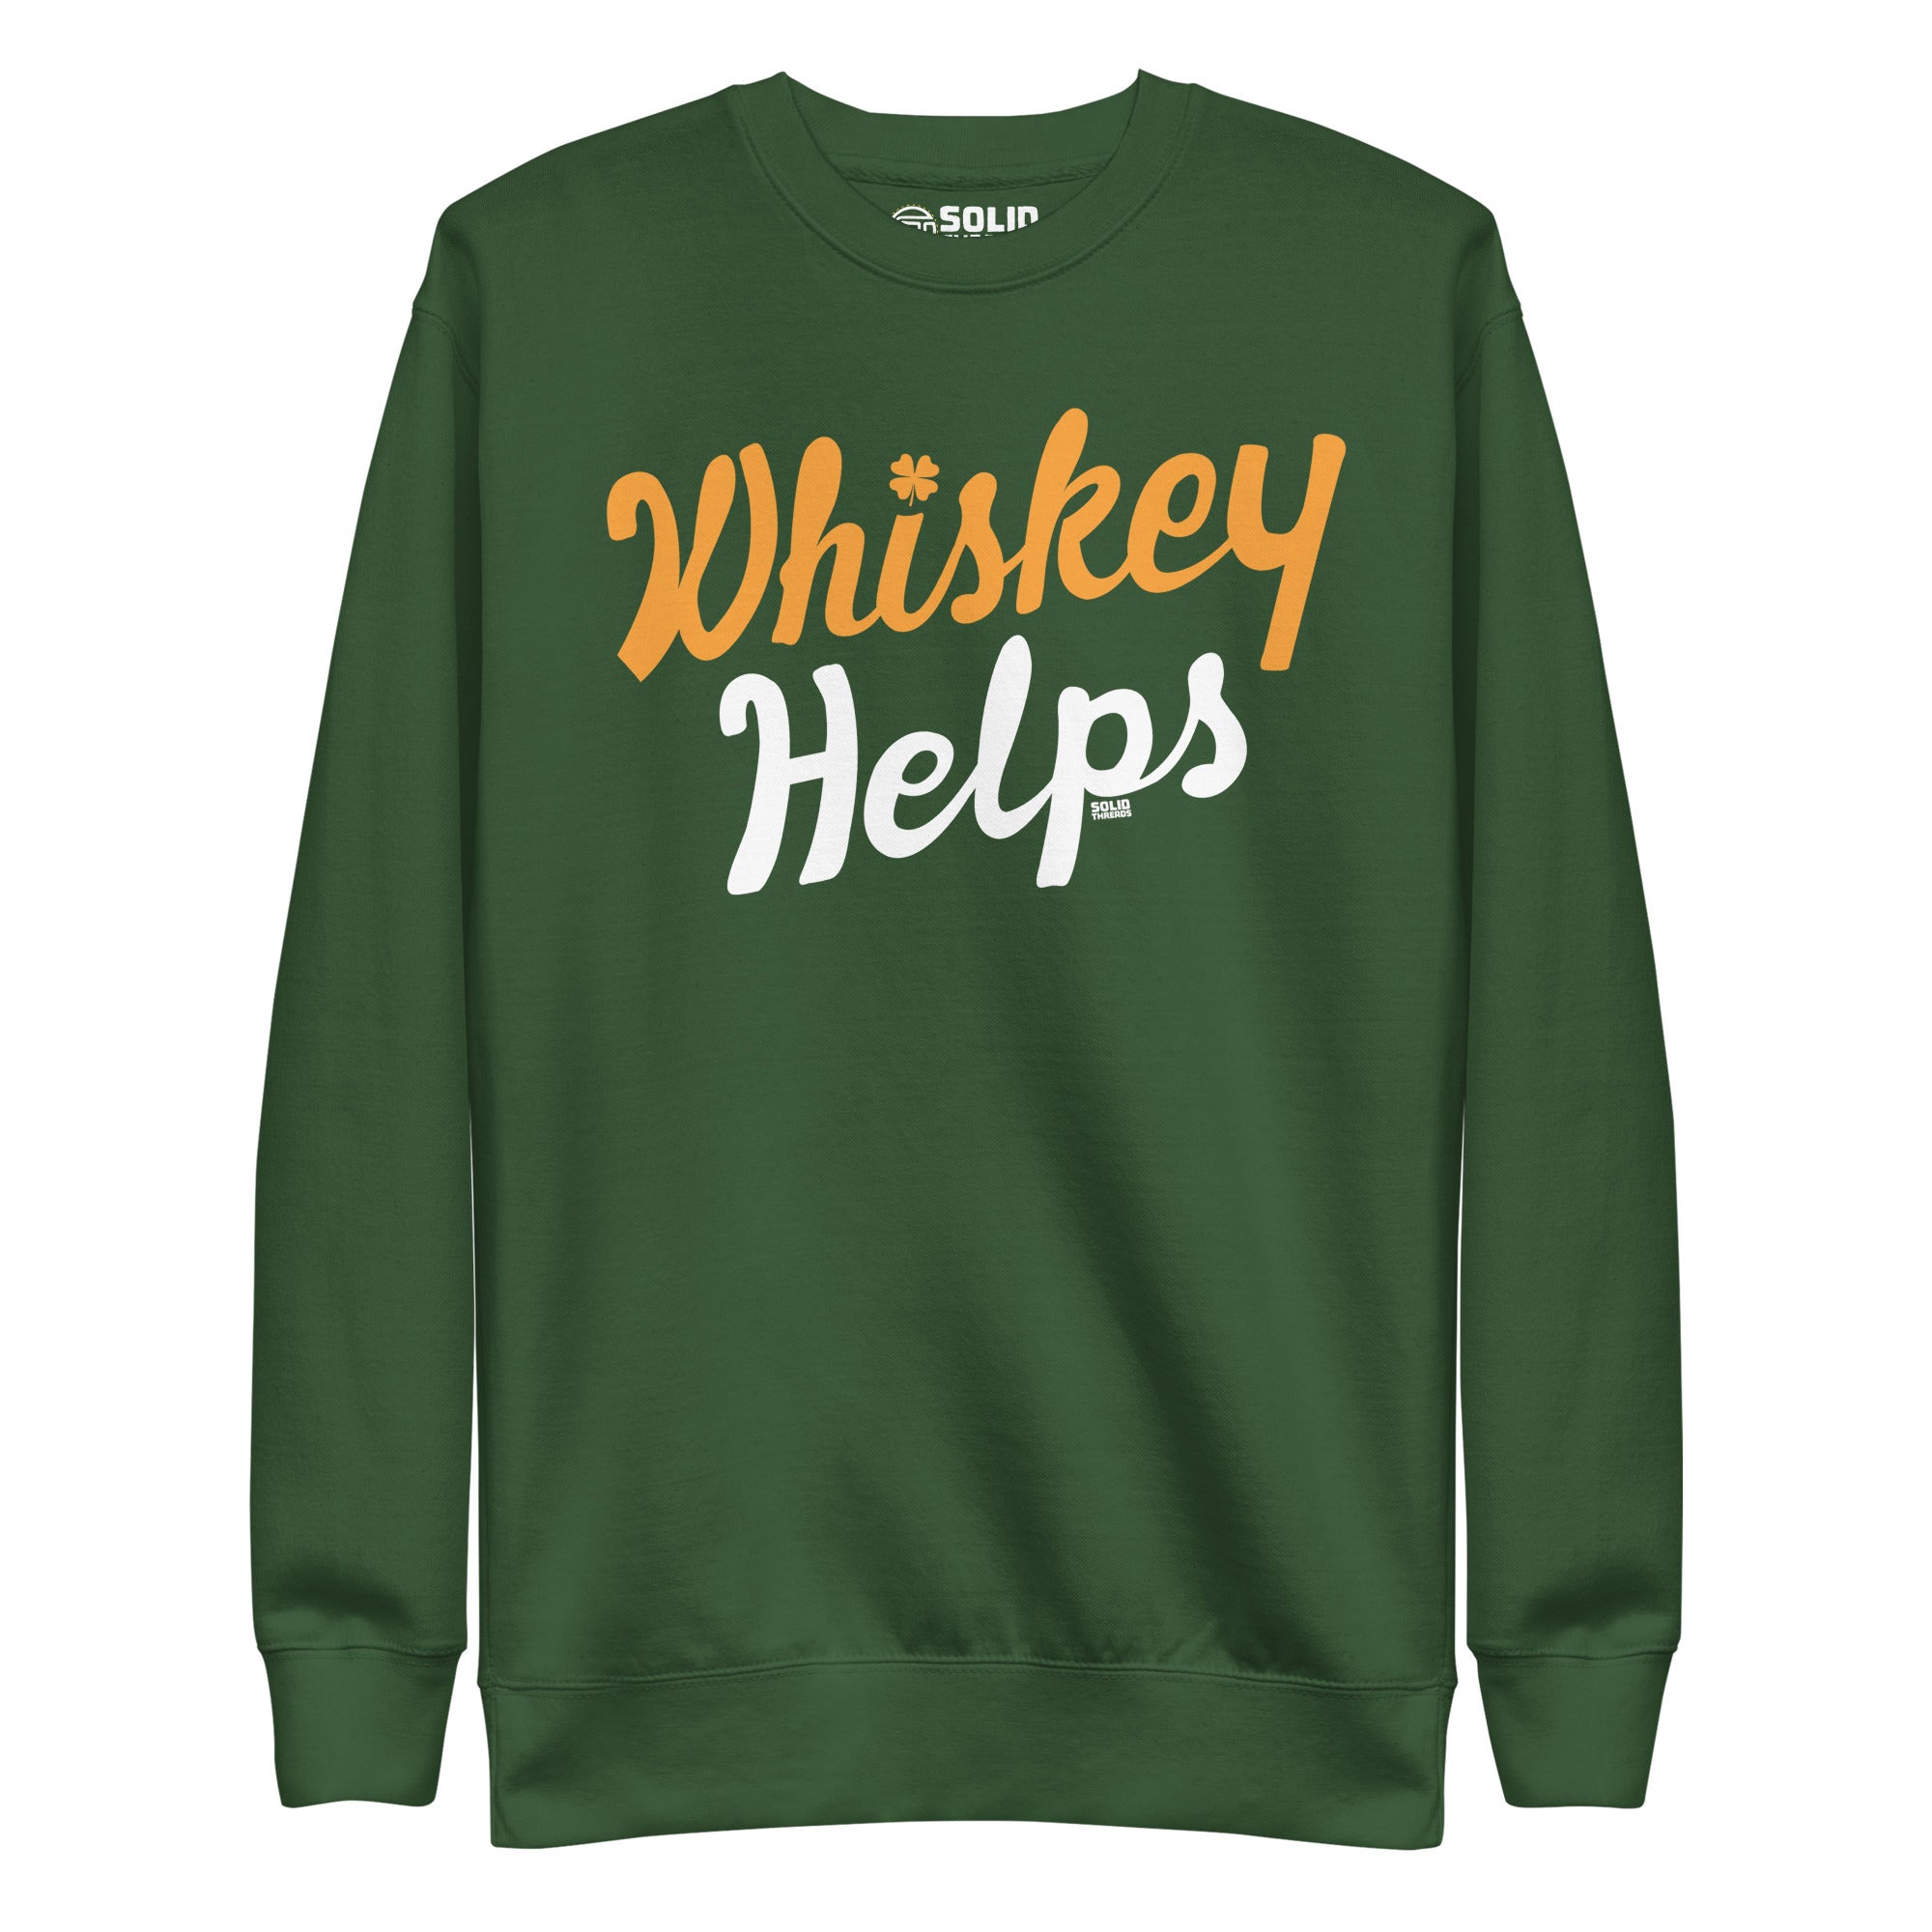 Irish Whiskey Helps Funny Classic Sweatshirt | Vintage St Paddy's Fleece | Solid Threads